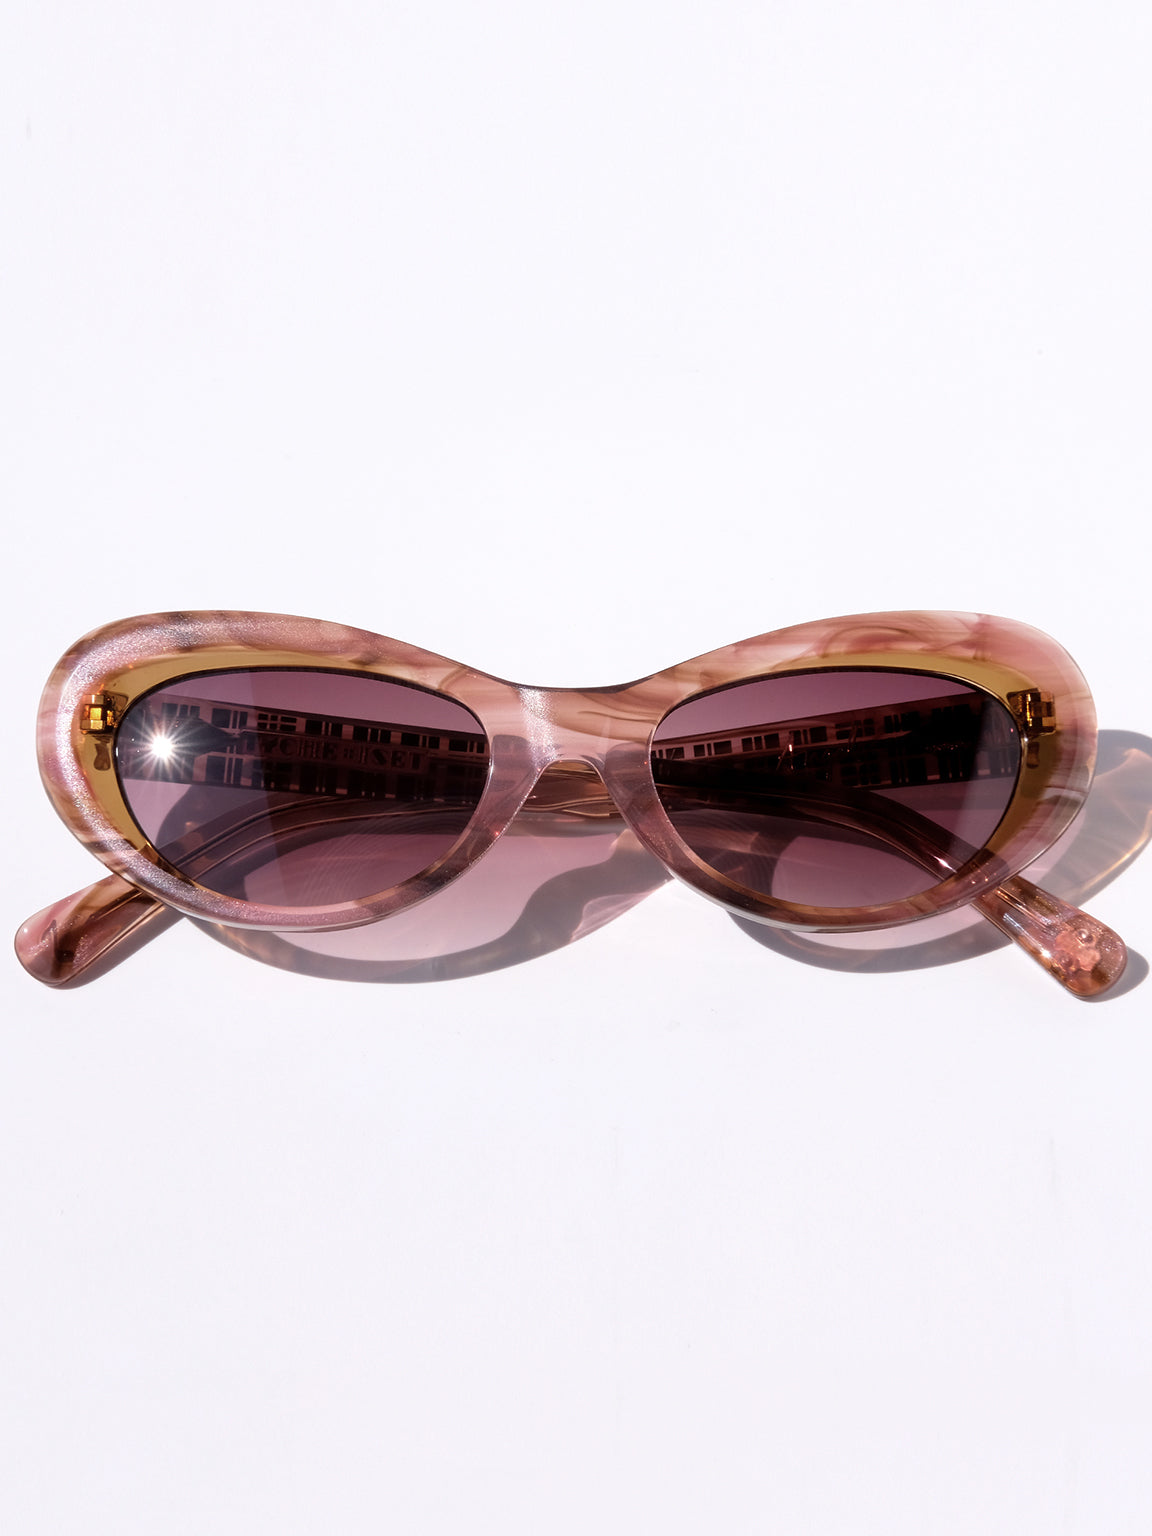 Classic Retro Cat Eye Acetate Sunglasses, Pink Sunglasses, Pink Glasses. Vintage Style Eyewear. Luxury Sunglasses. Vacation Accessories. Travel Style